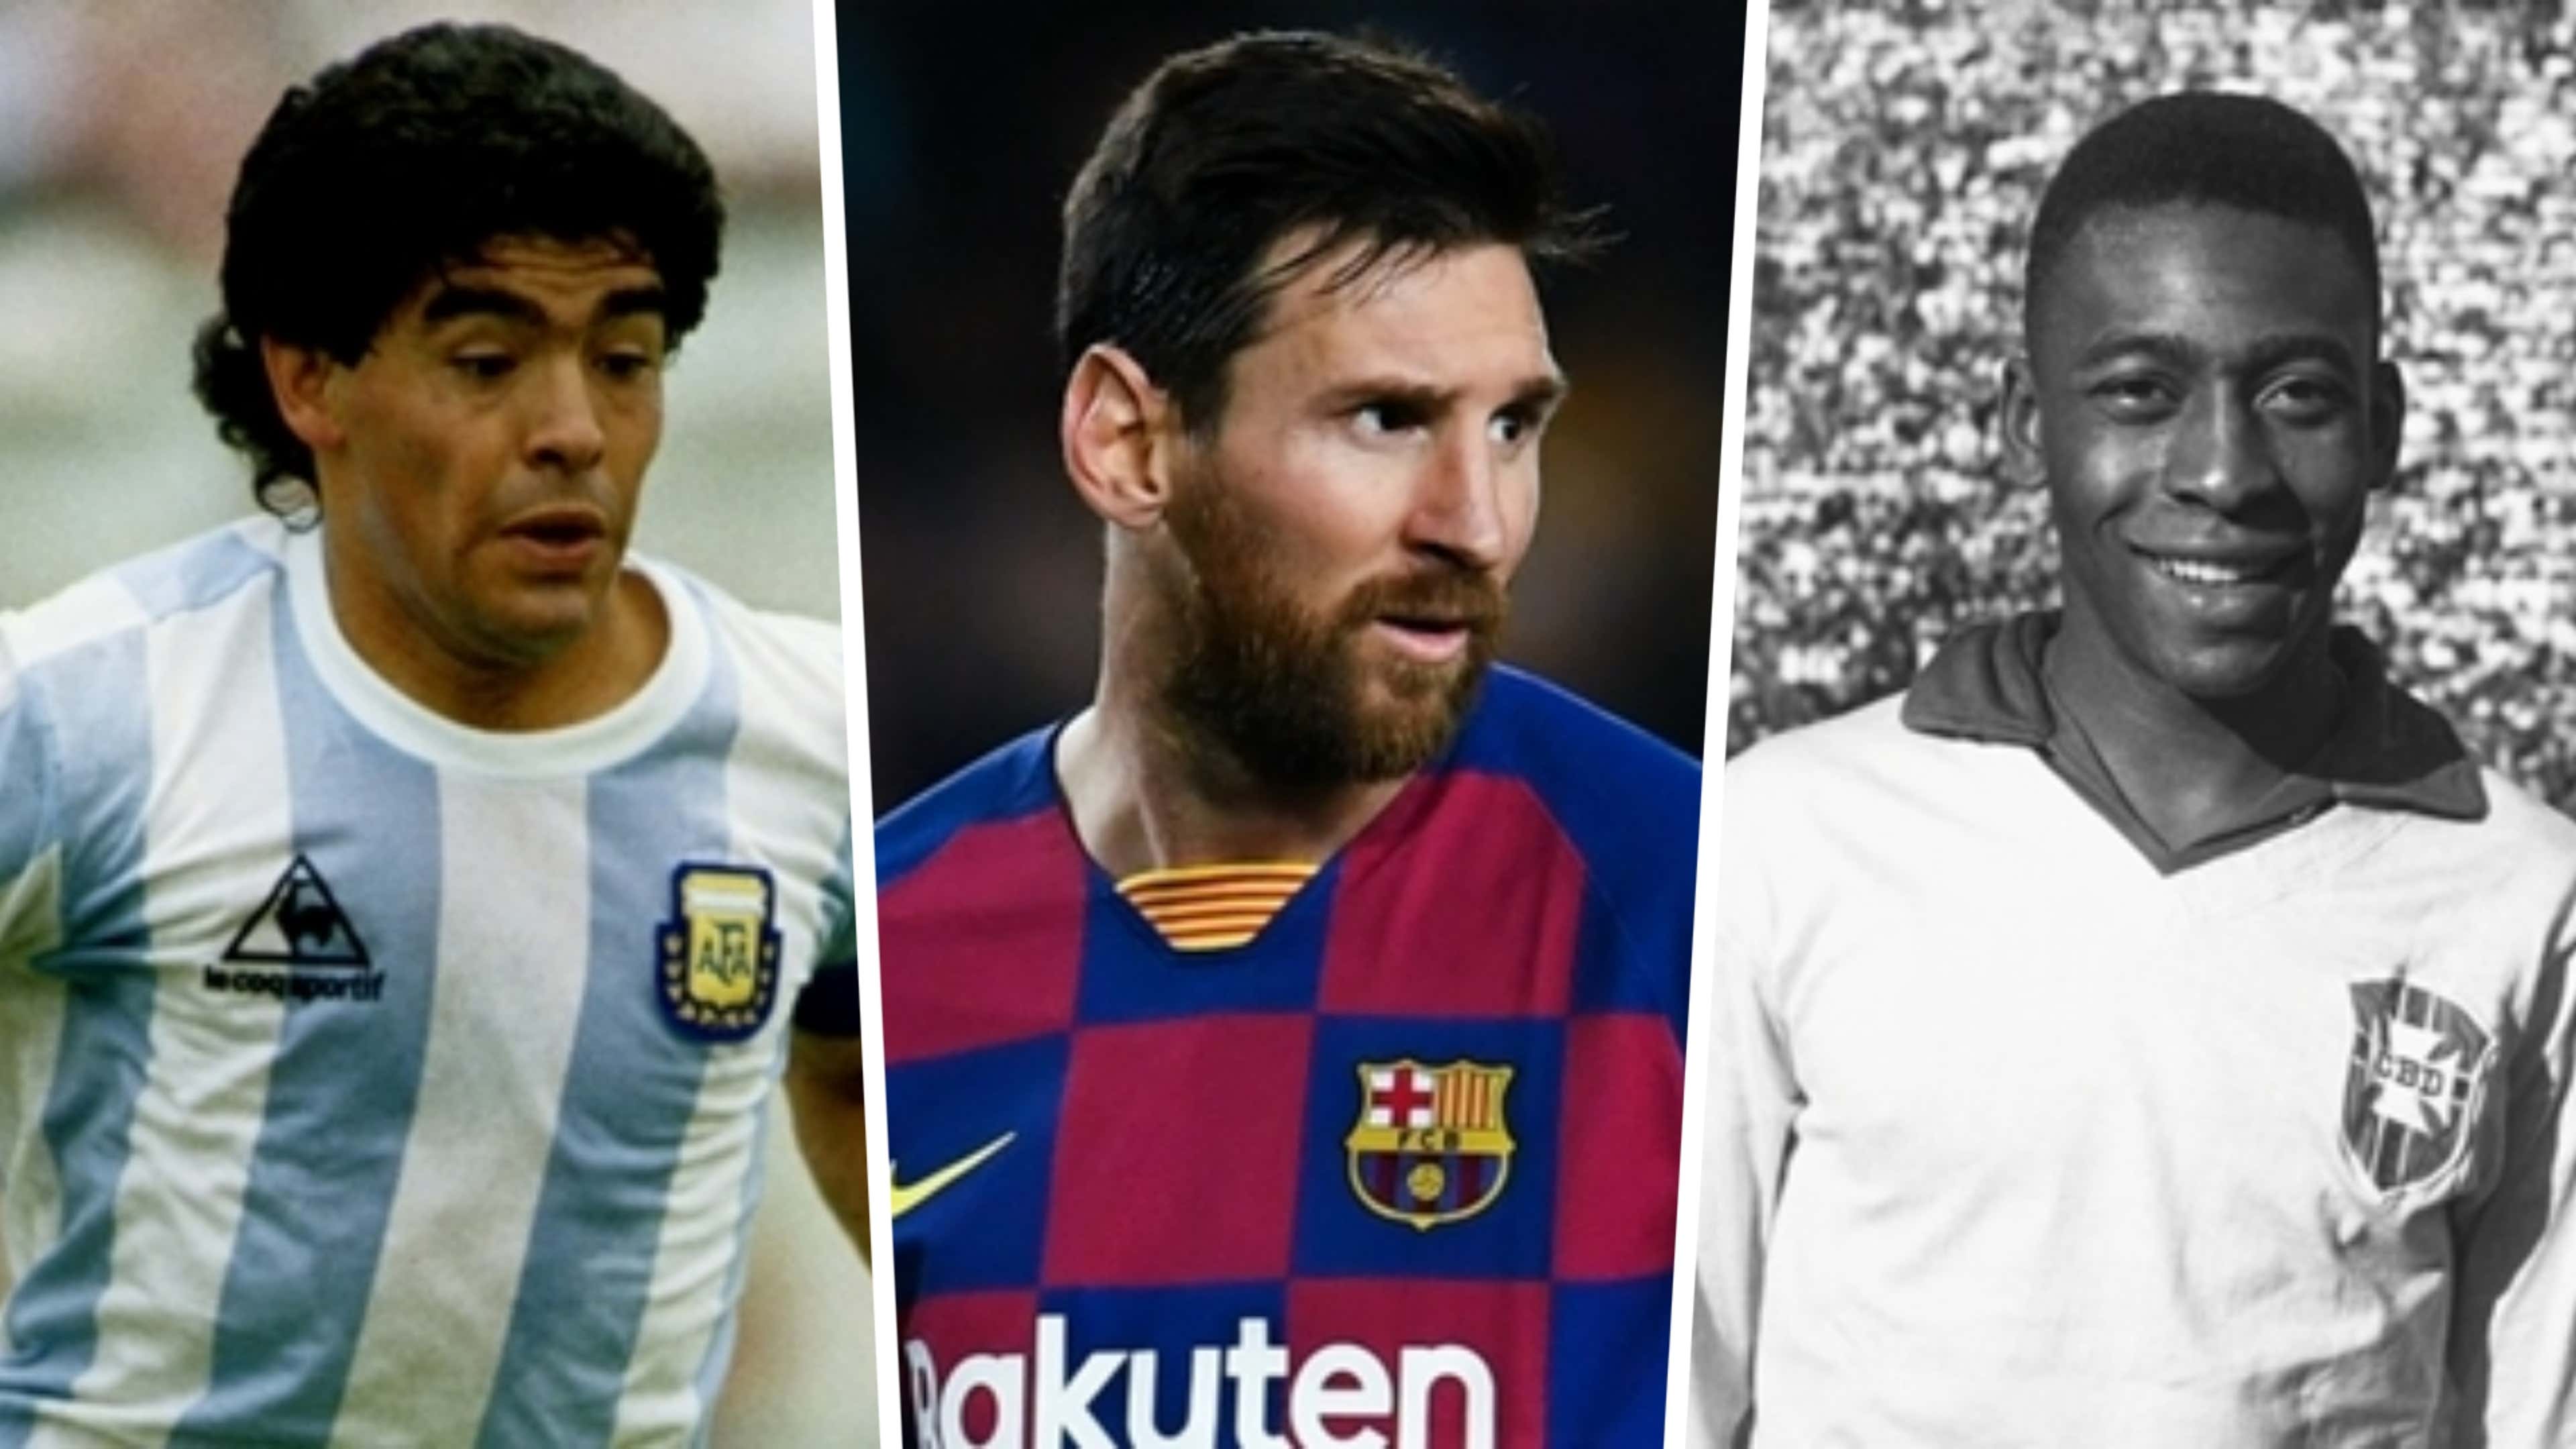 Pele, Maradona, Messi, Ronaldo - Who's The Greatest Footballer